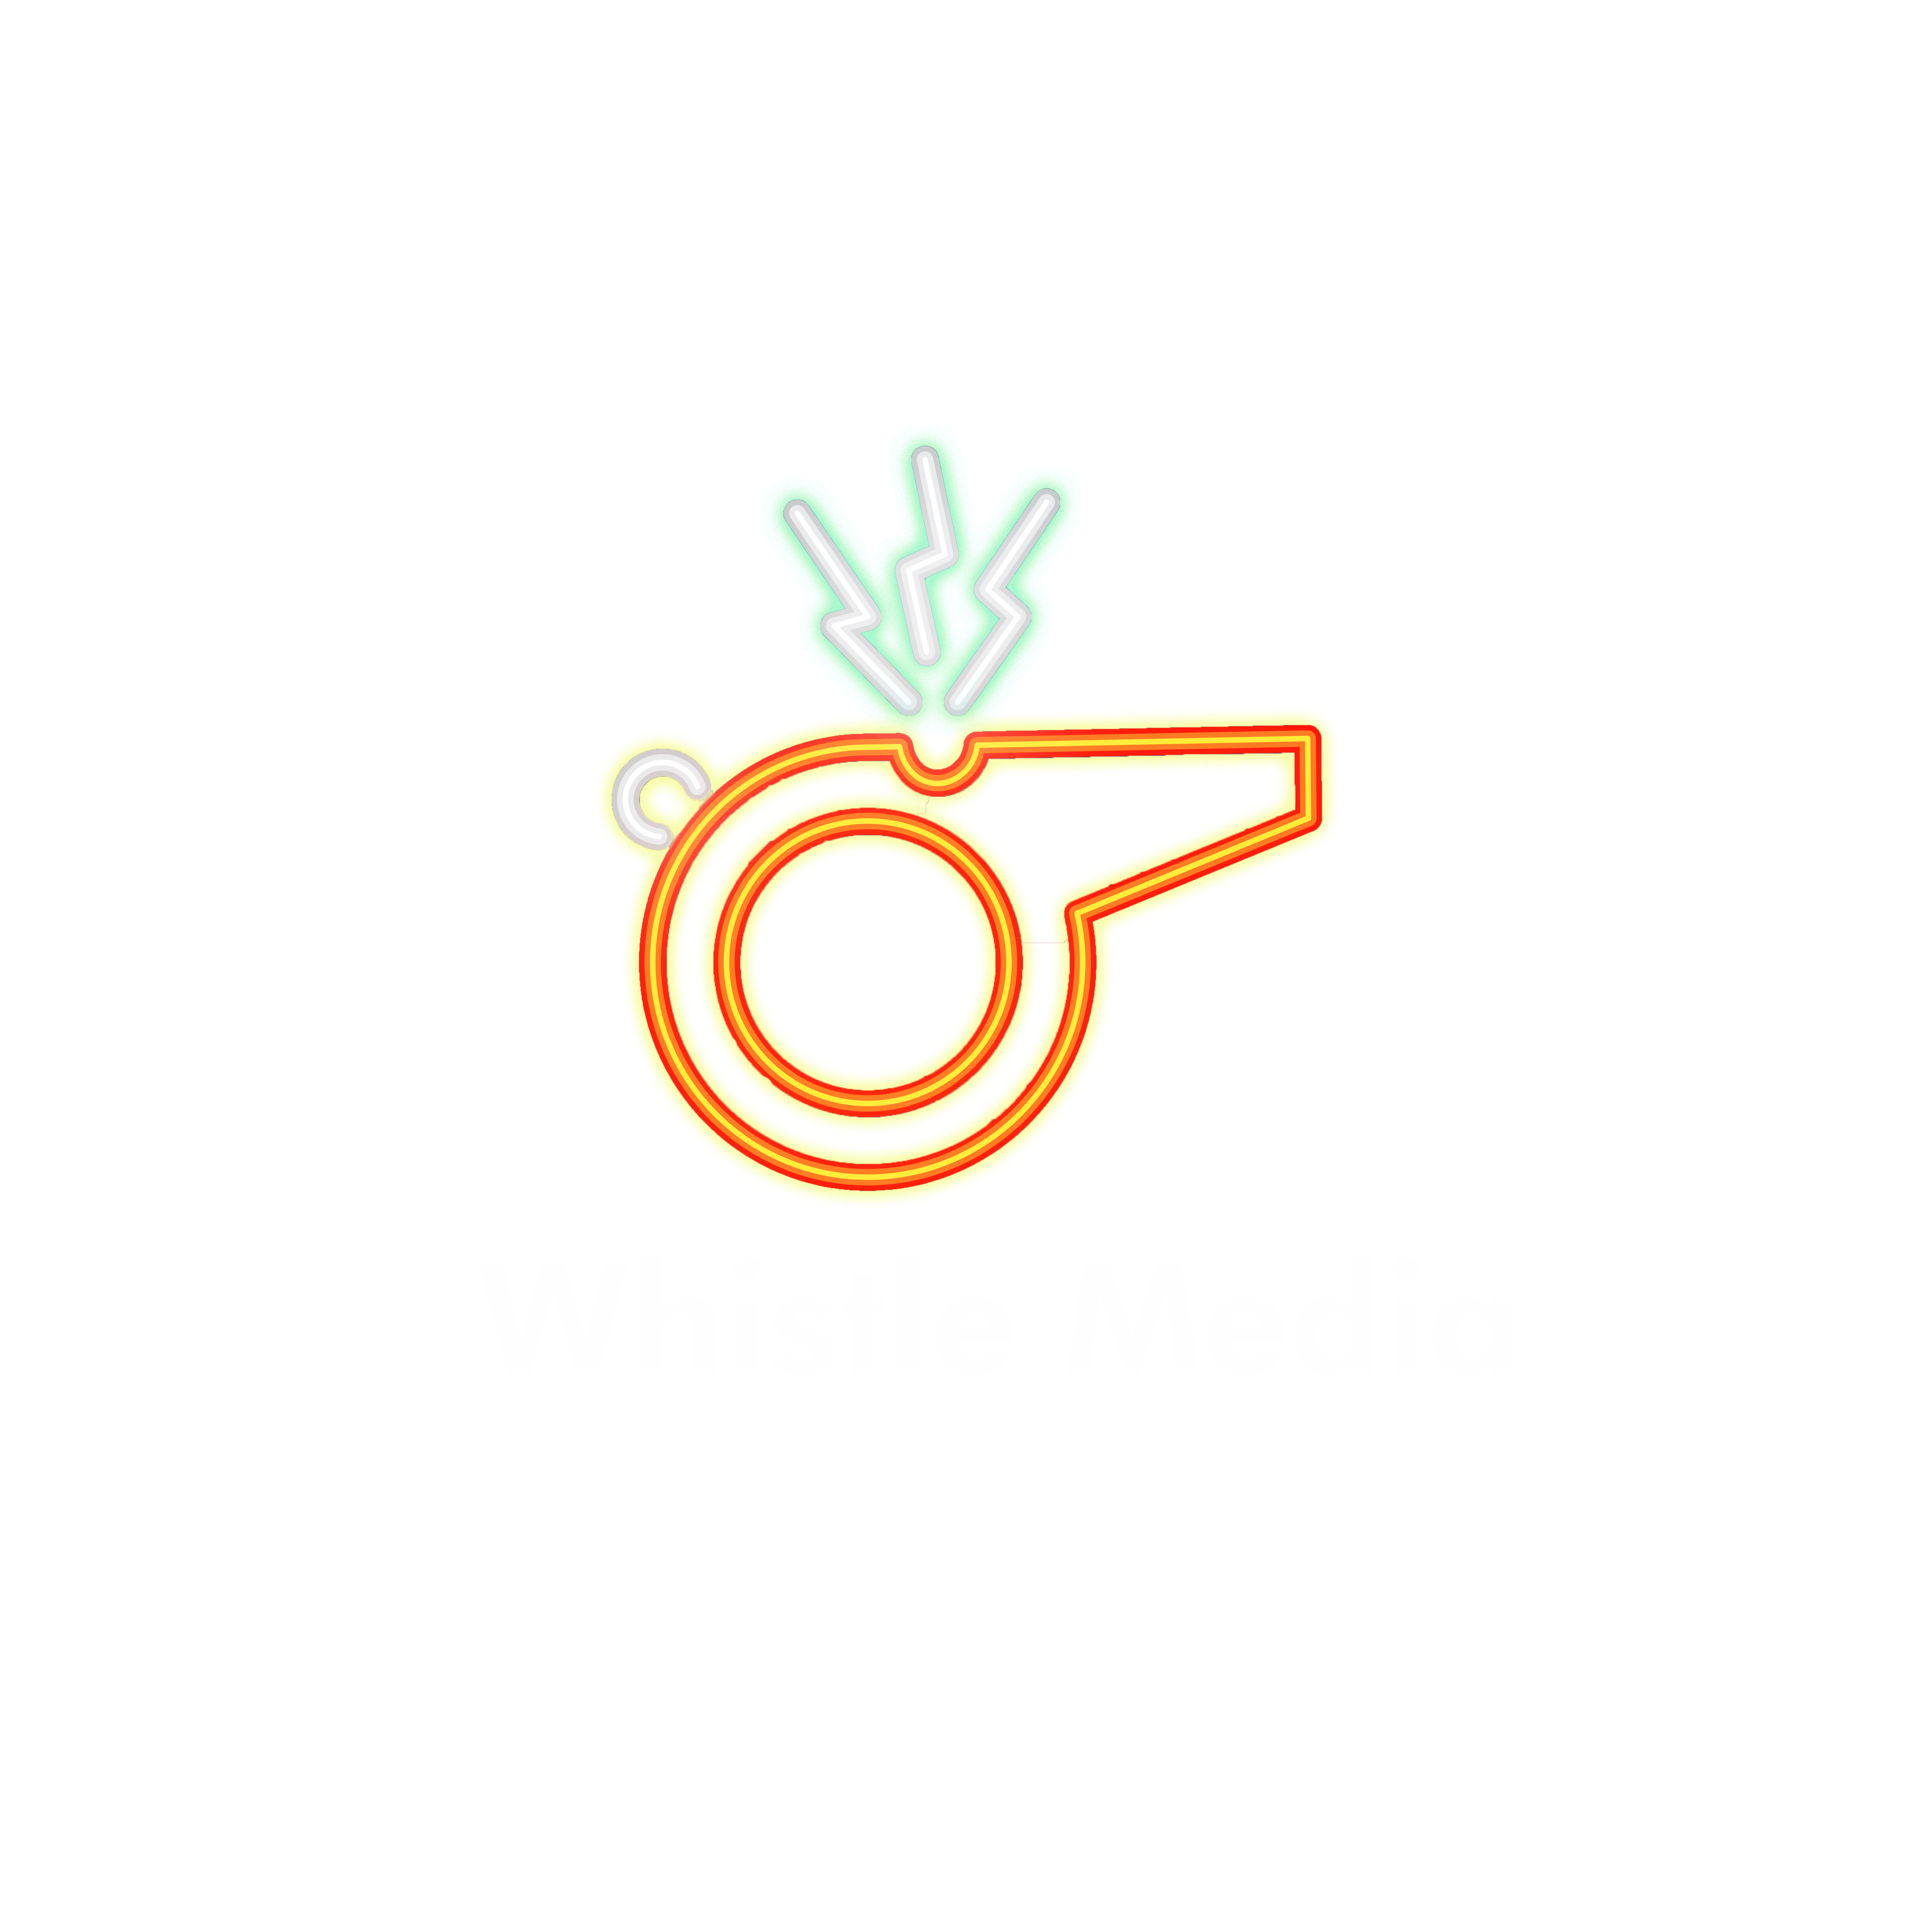 Whistle Media